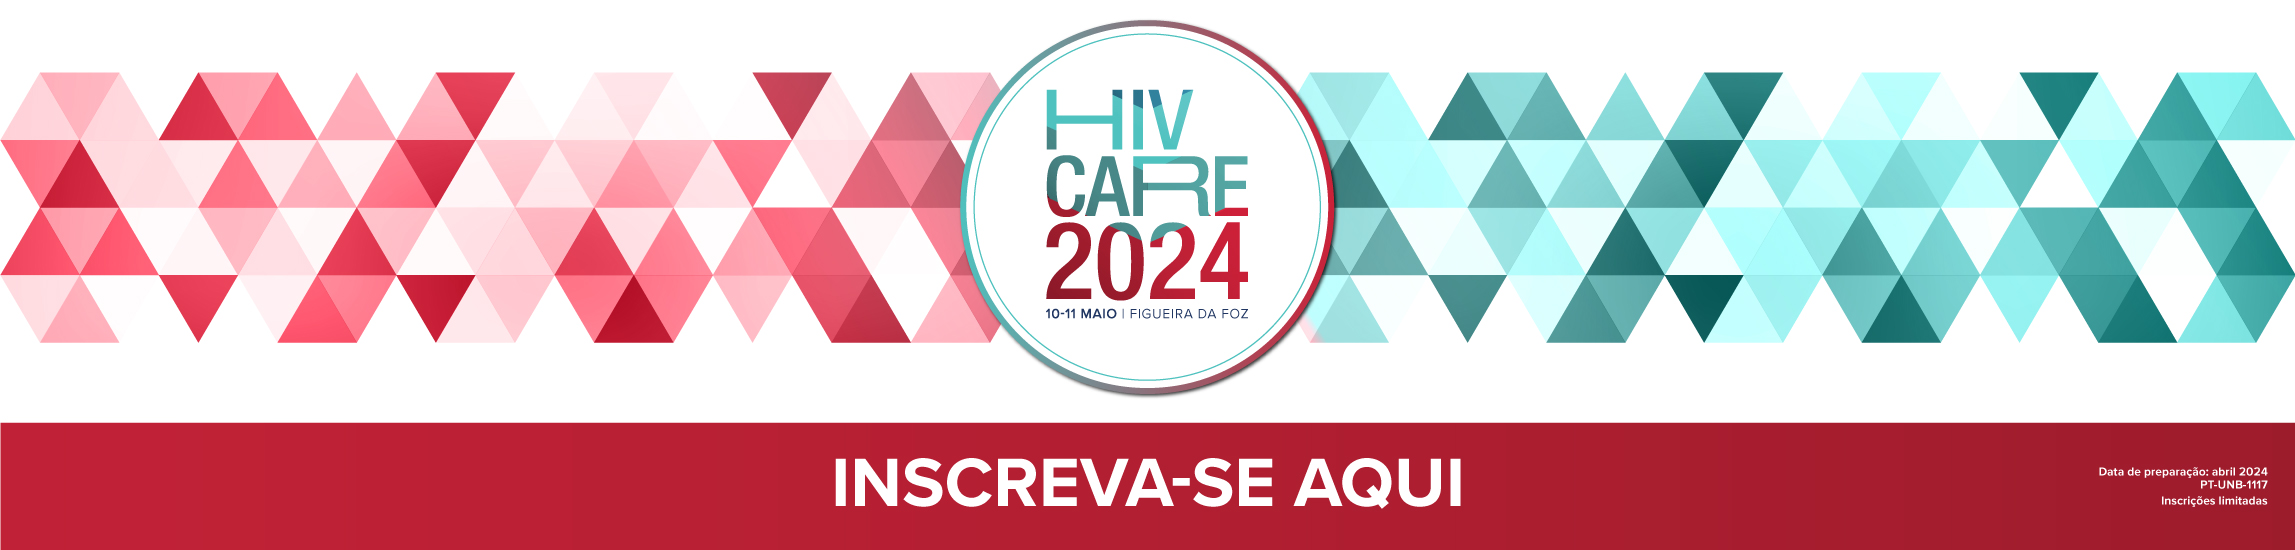 HIV Care 2024